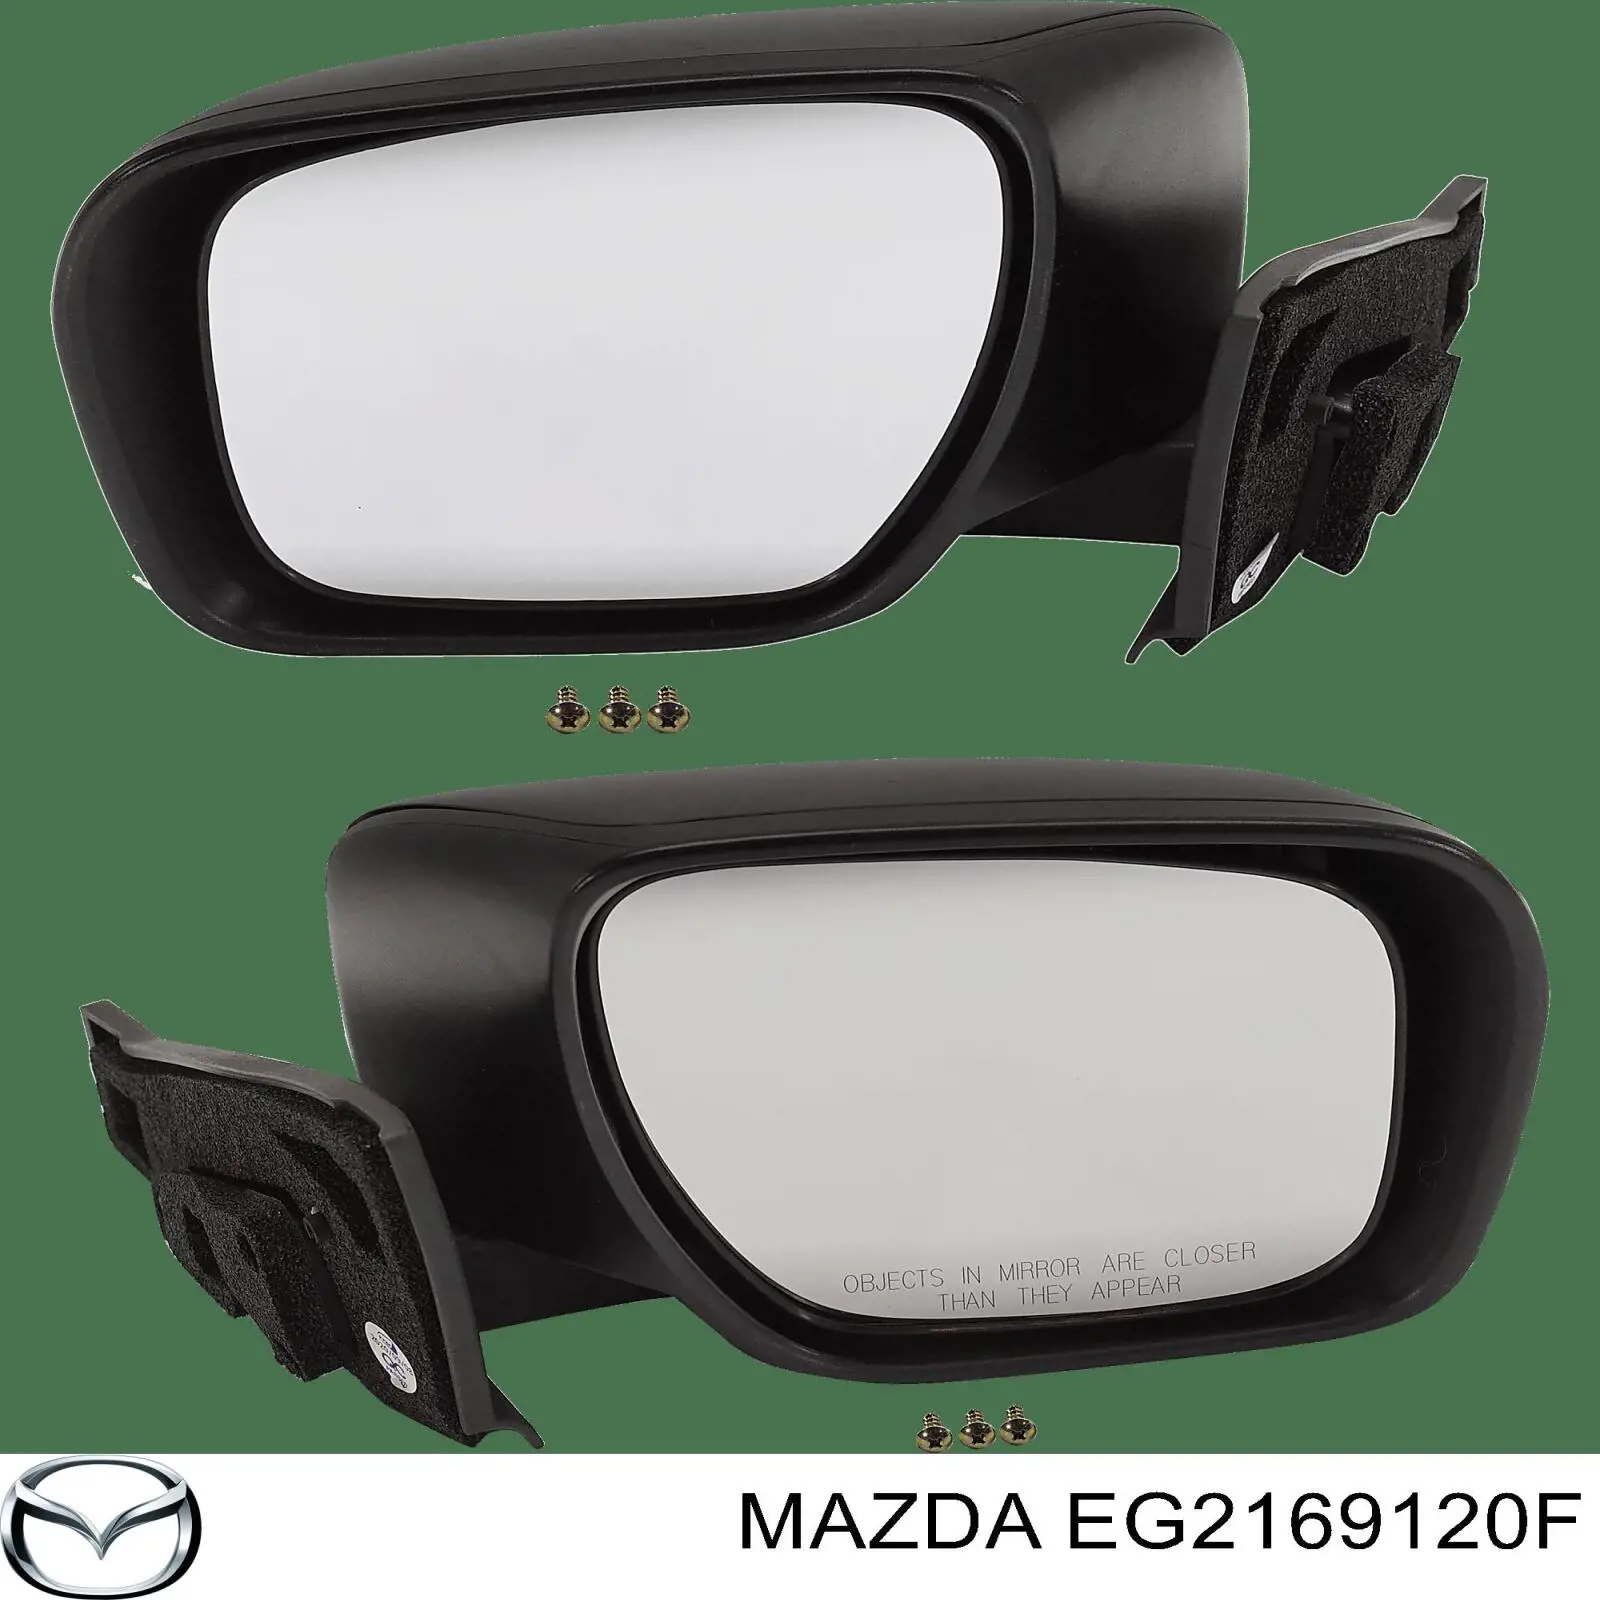 EG2169120F Mazda зеркало заднего вида правое